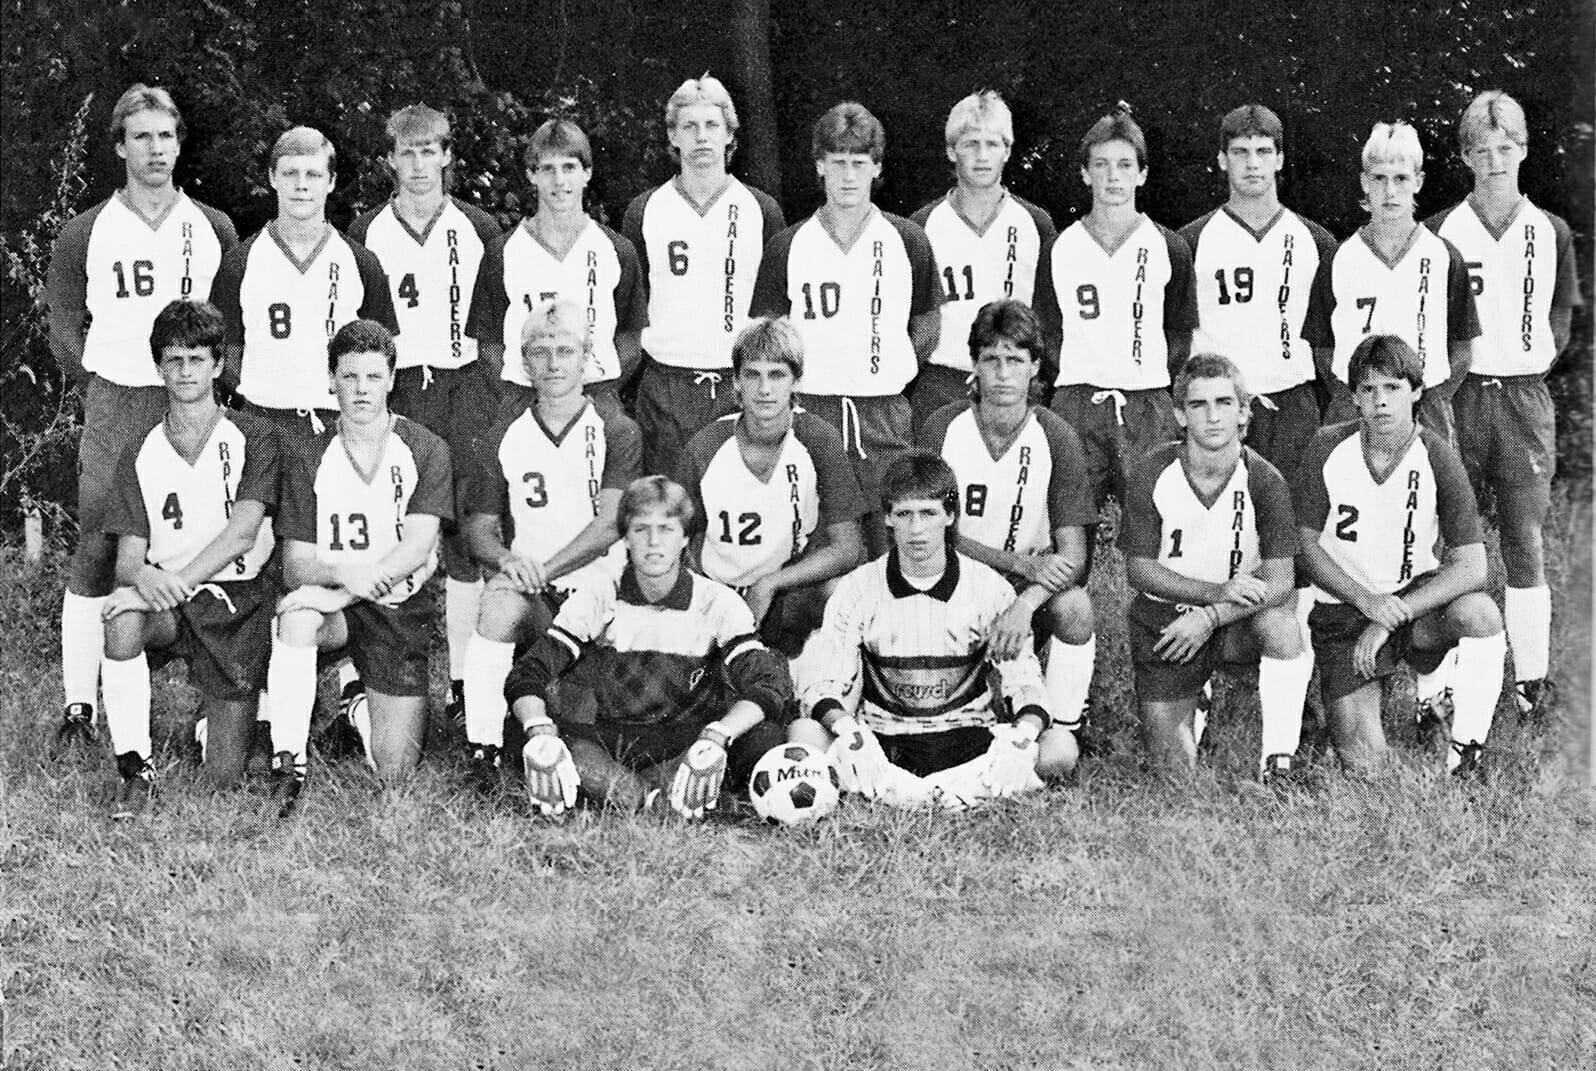 1986 Boys Soccer Team - QND Hall of Fame